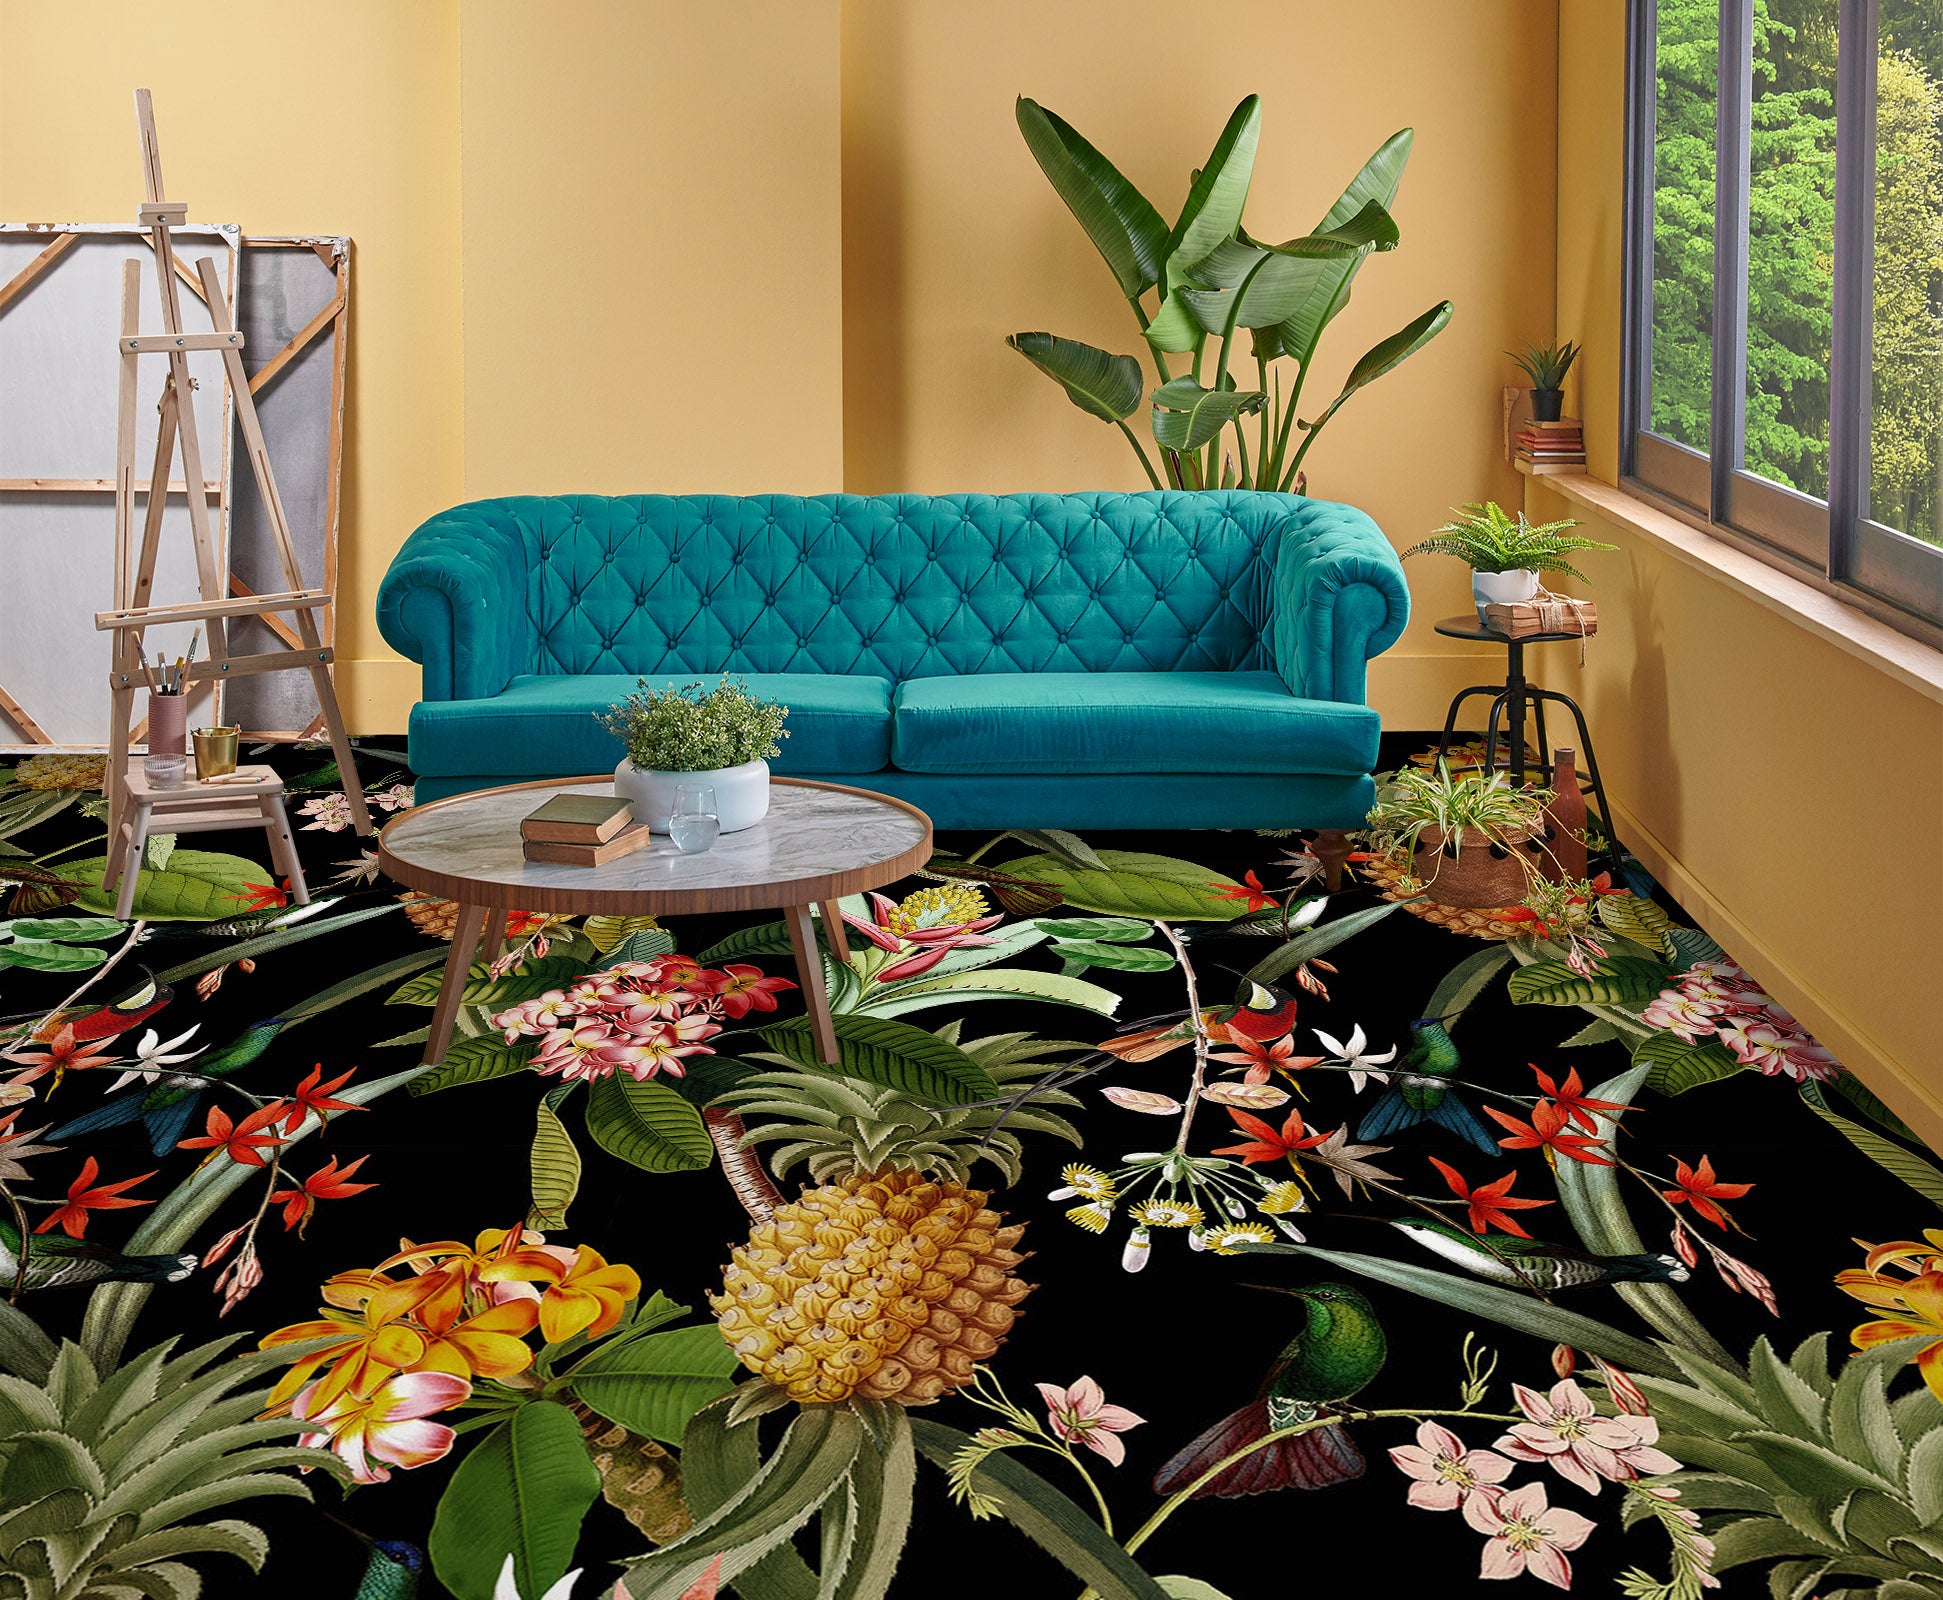 3D Flower Pineapple Leaves 10005 Uta Naumann Floor Mural  Wallpaper Murals Self-Adhesive Removable Print Epoxy